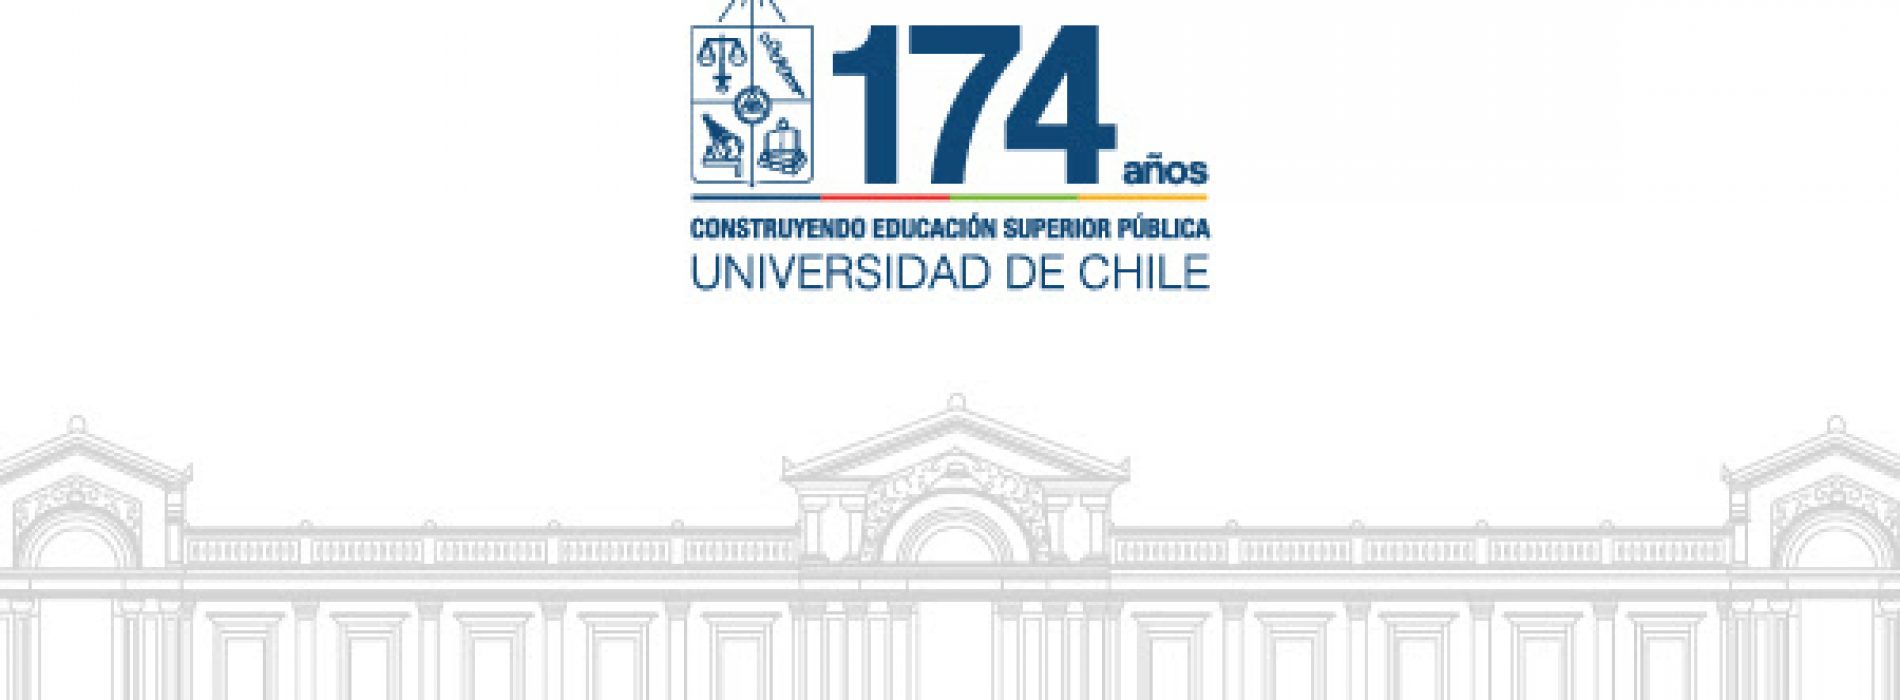 Gala invitation anniversary no. 174 University of Chile